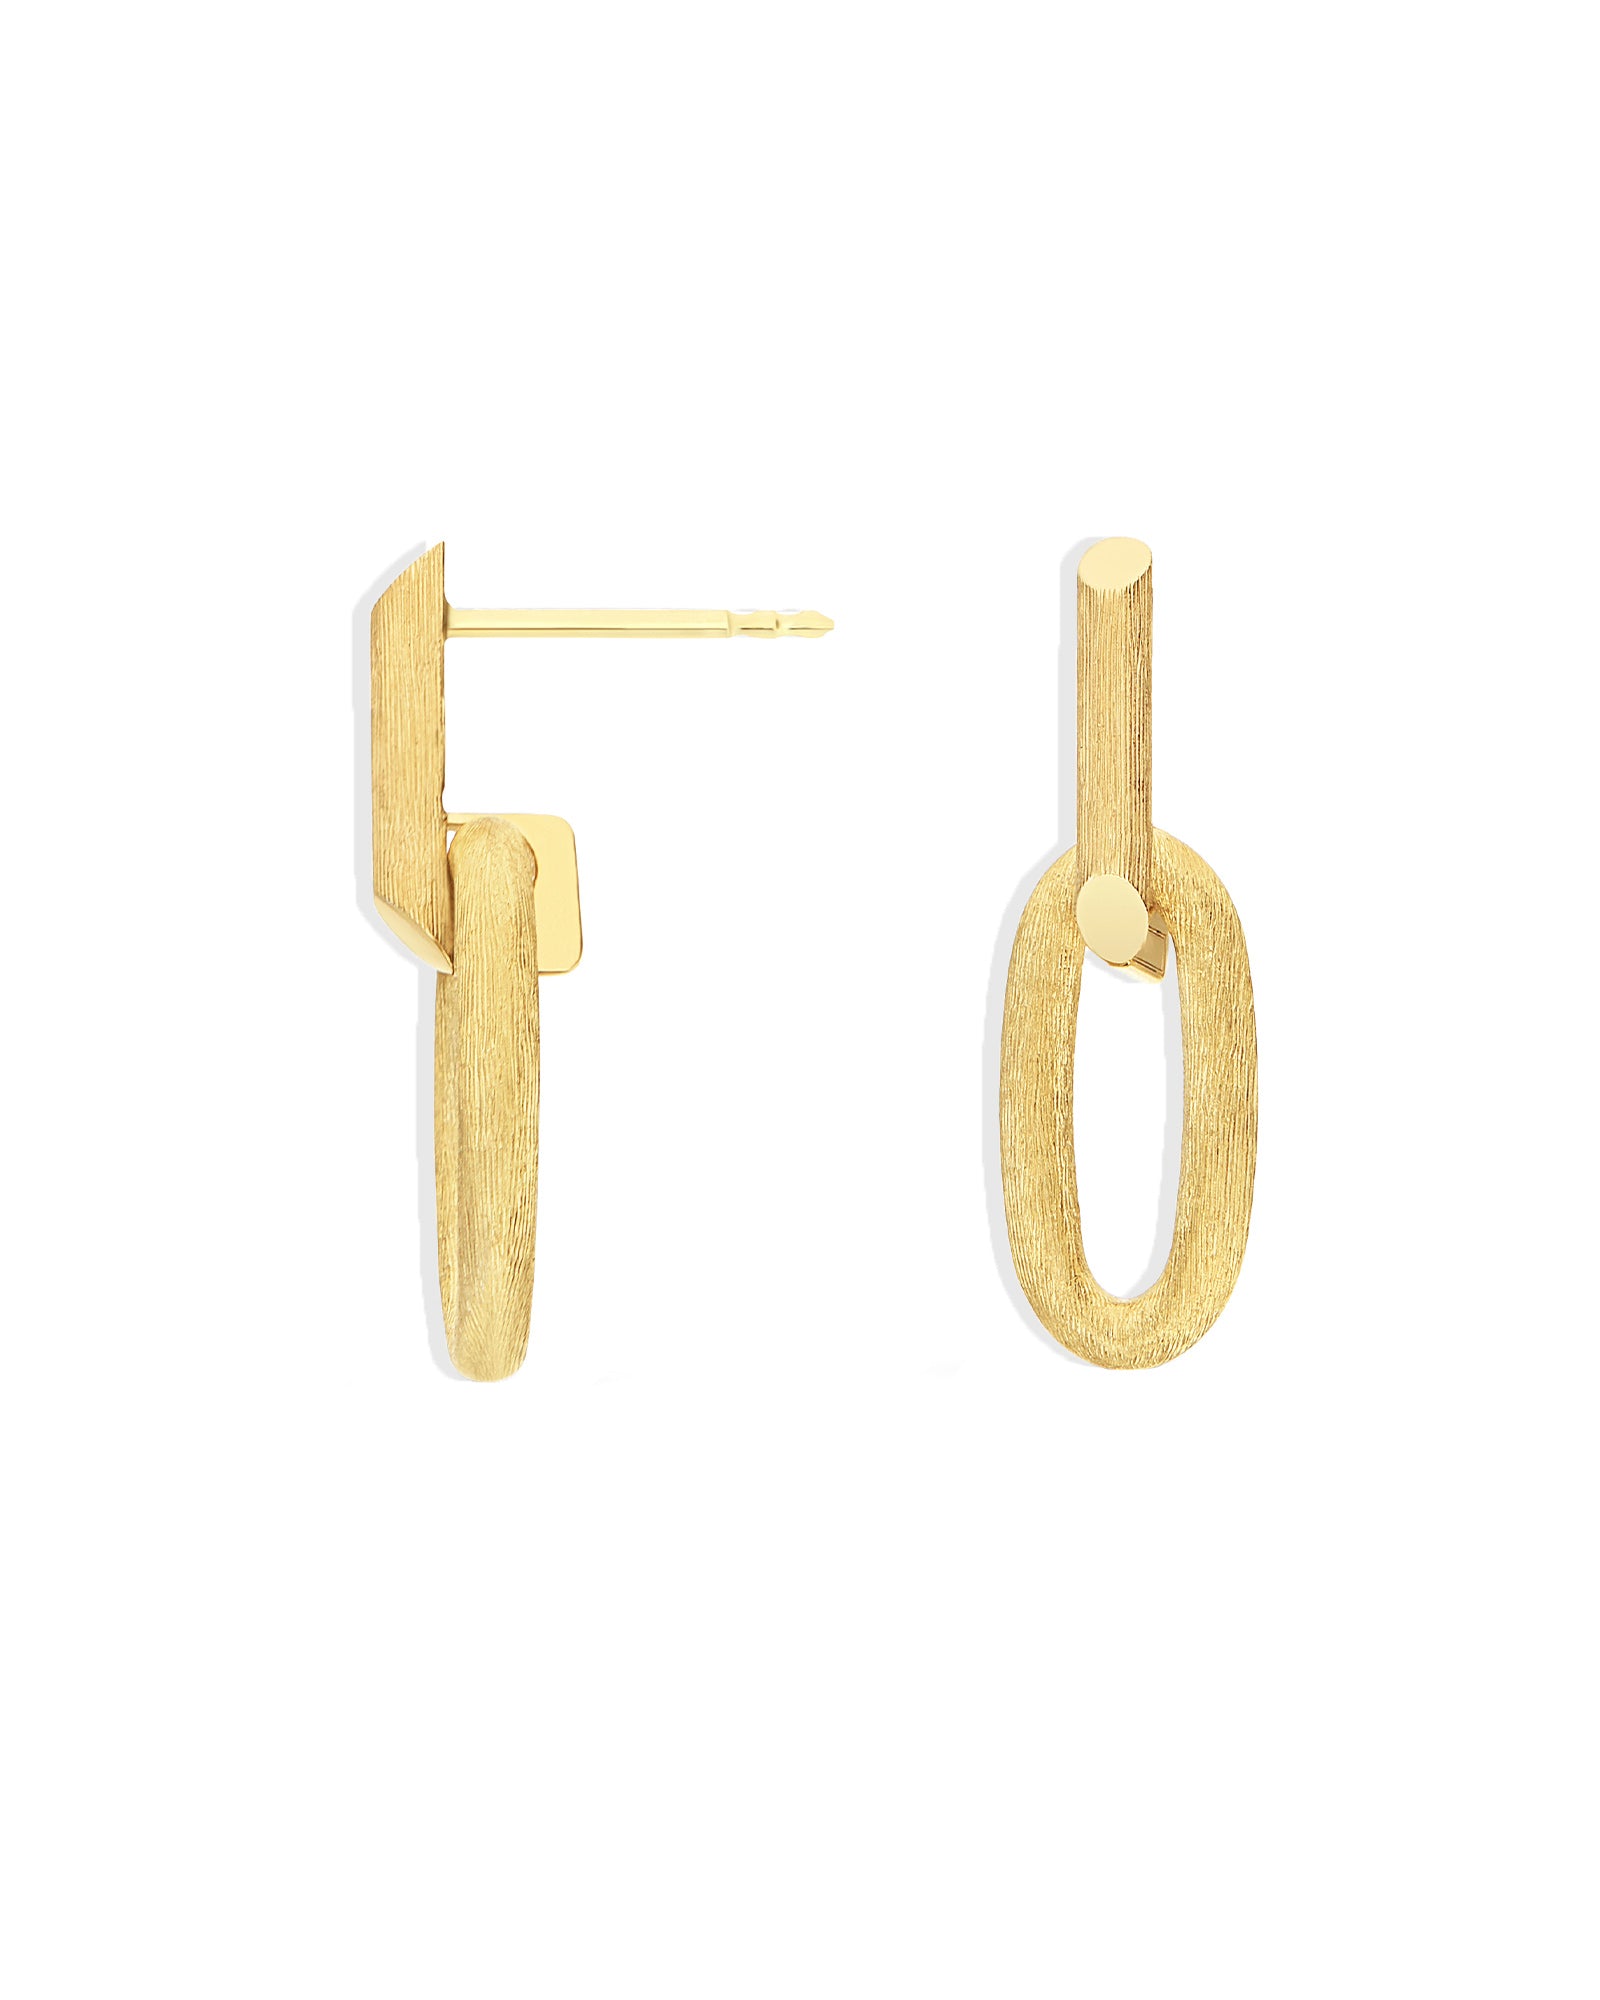 Libera Gold elegant oval Earrings